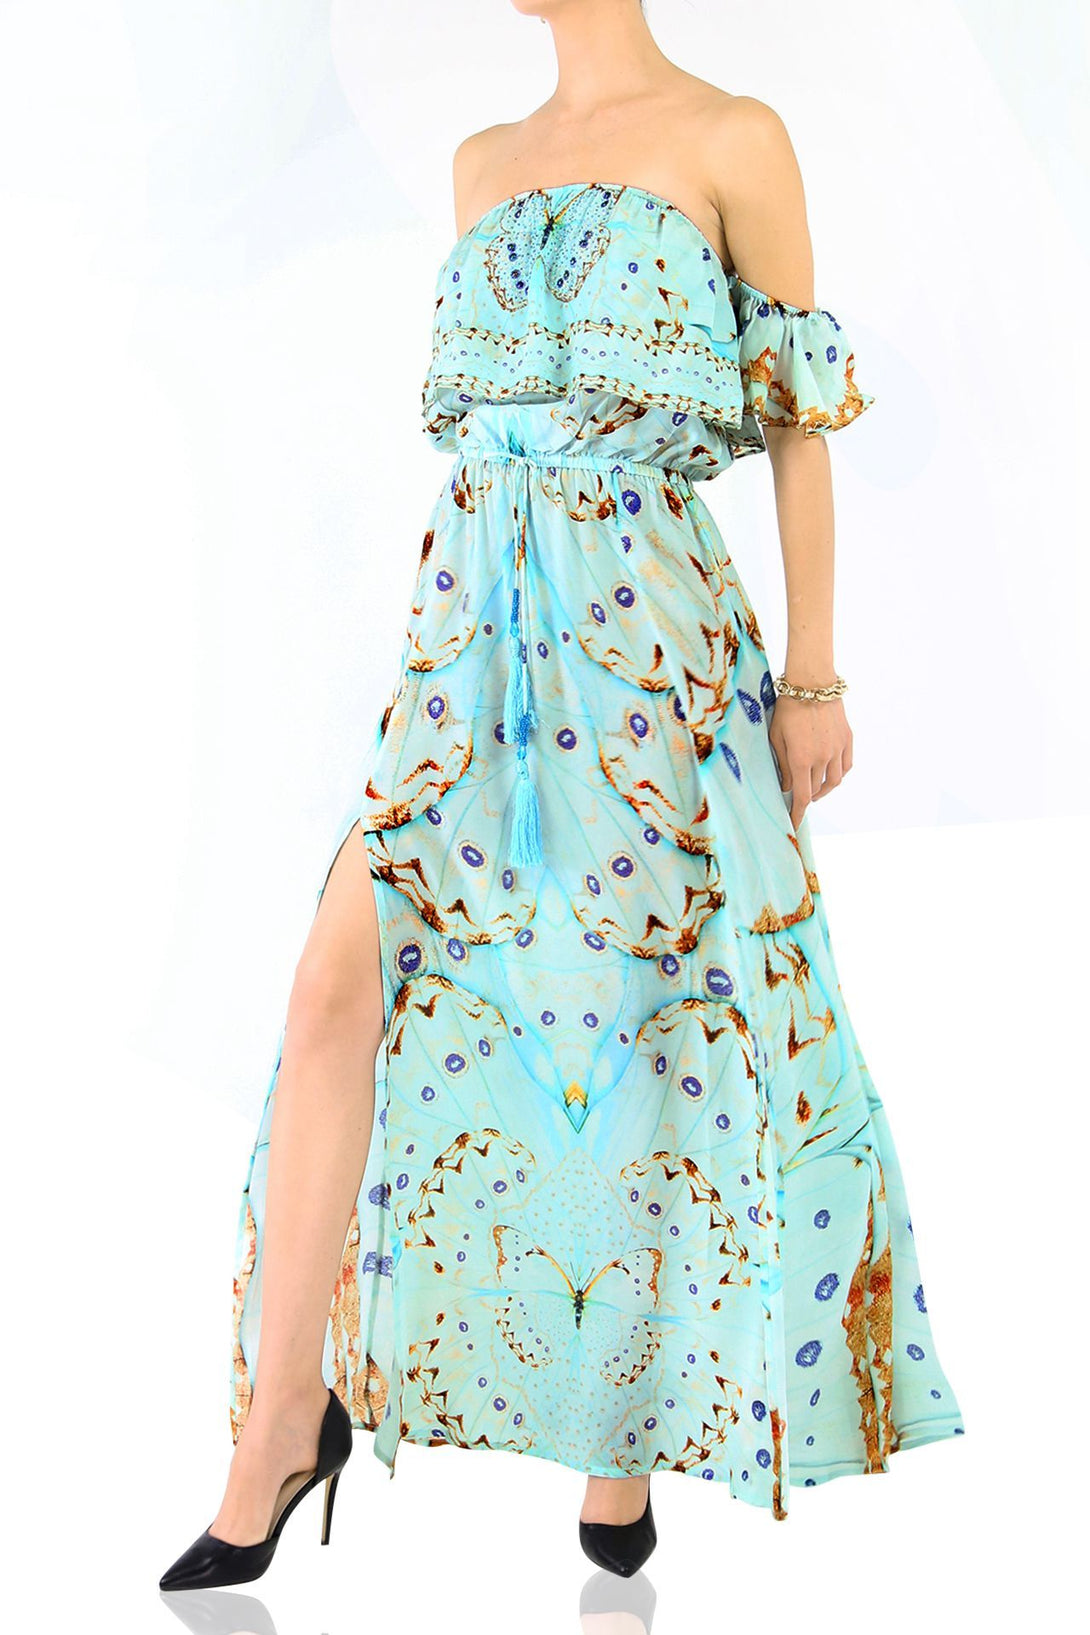  womens mint green dress, off the shoulder floral dress, long flowy dresses, Shahida Parides, 